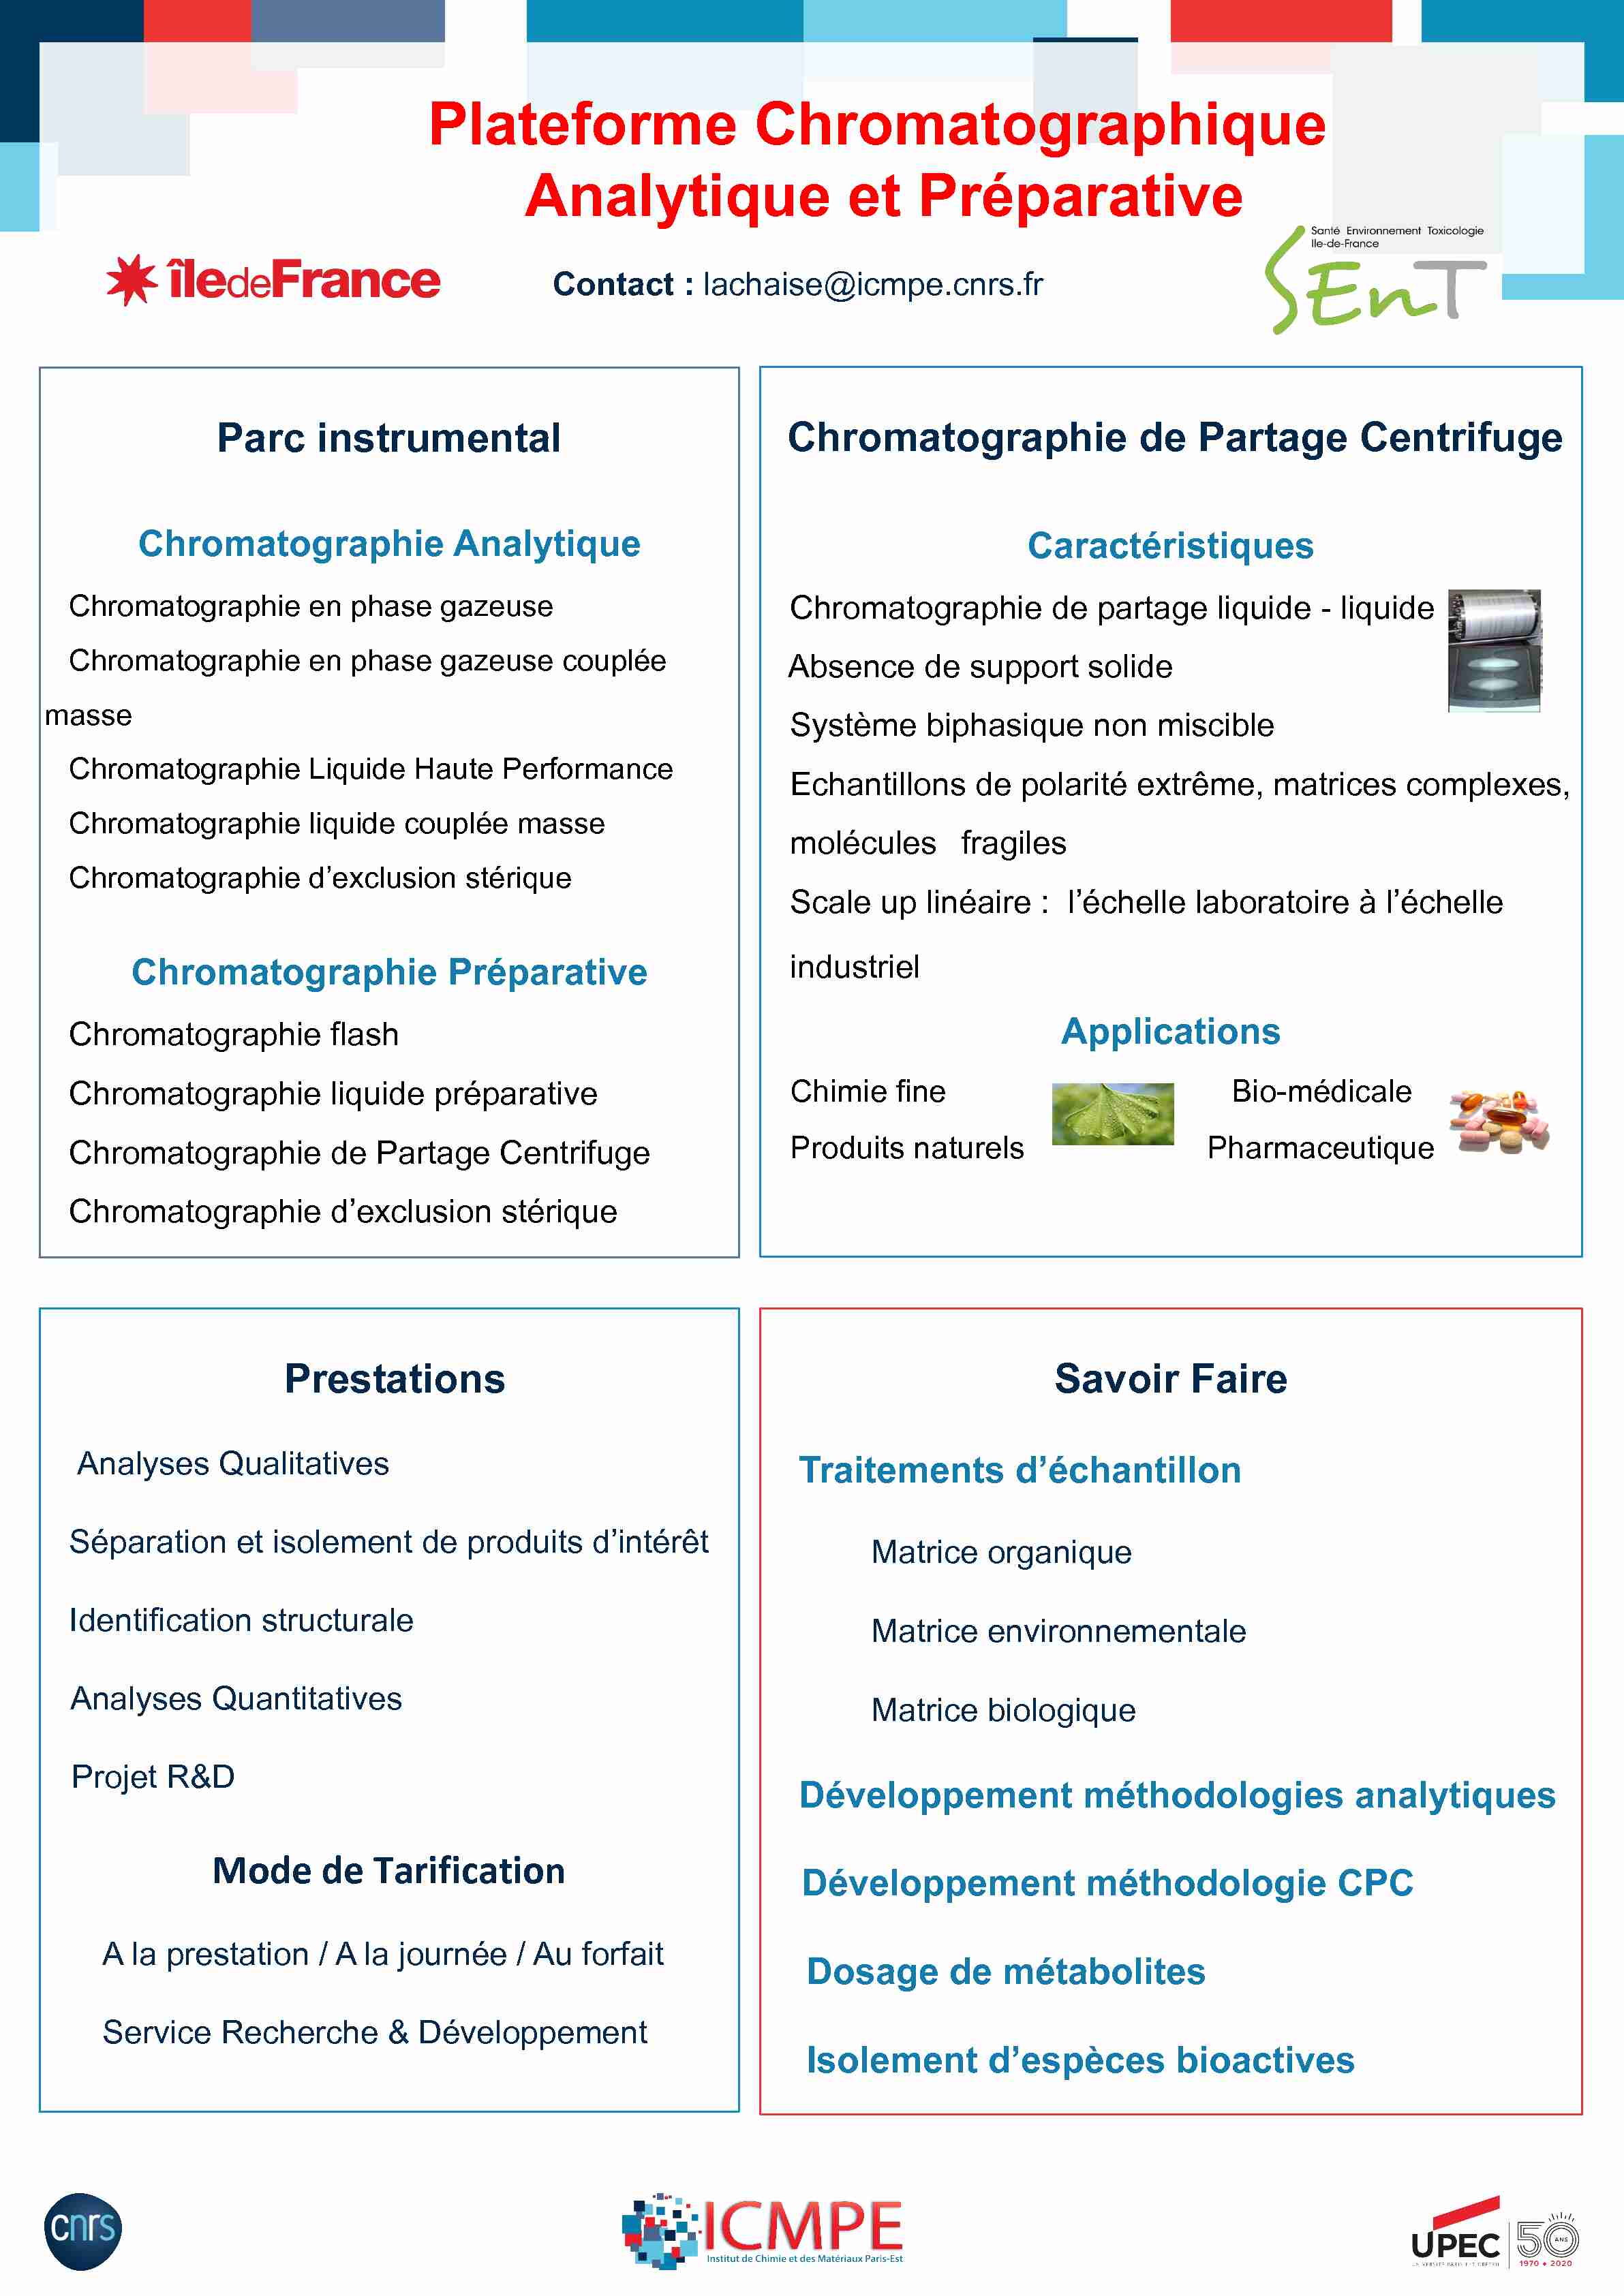 [PDF] Chromatographie de Partage Centrifuge - ICMPE